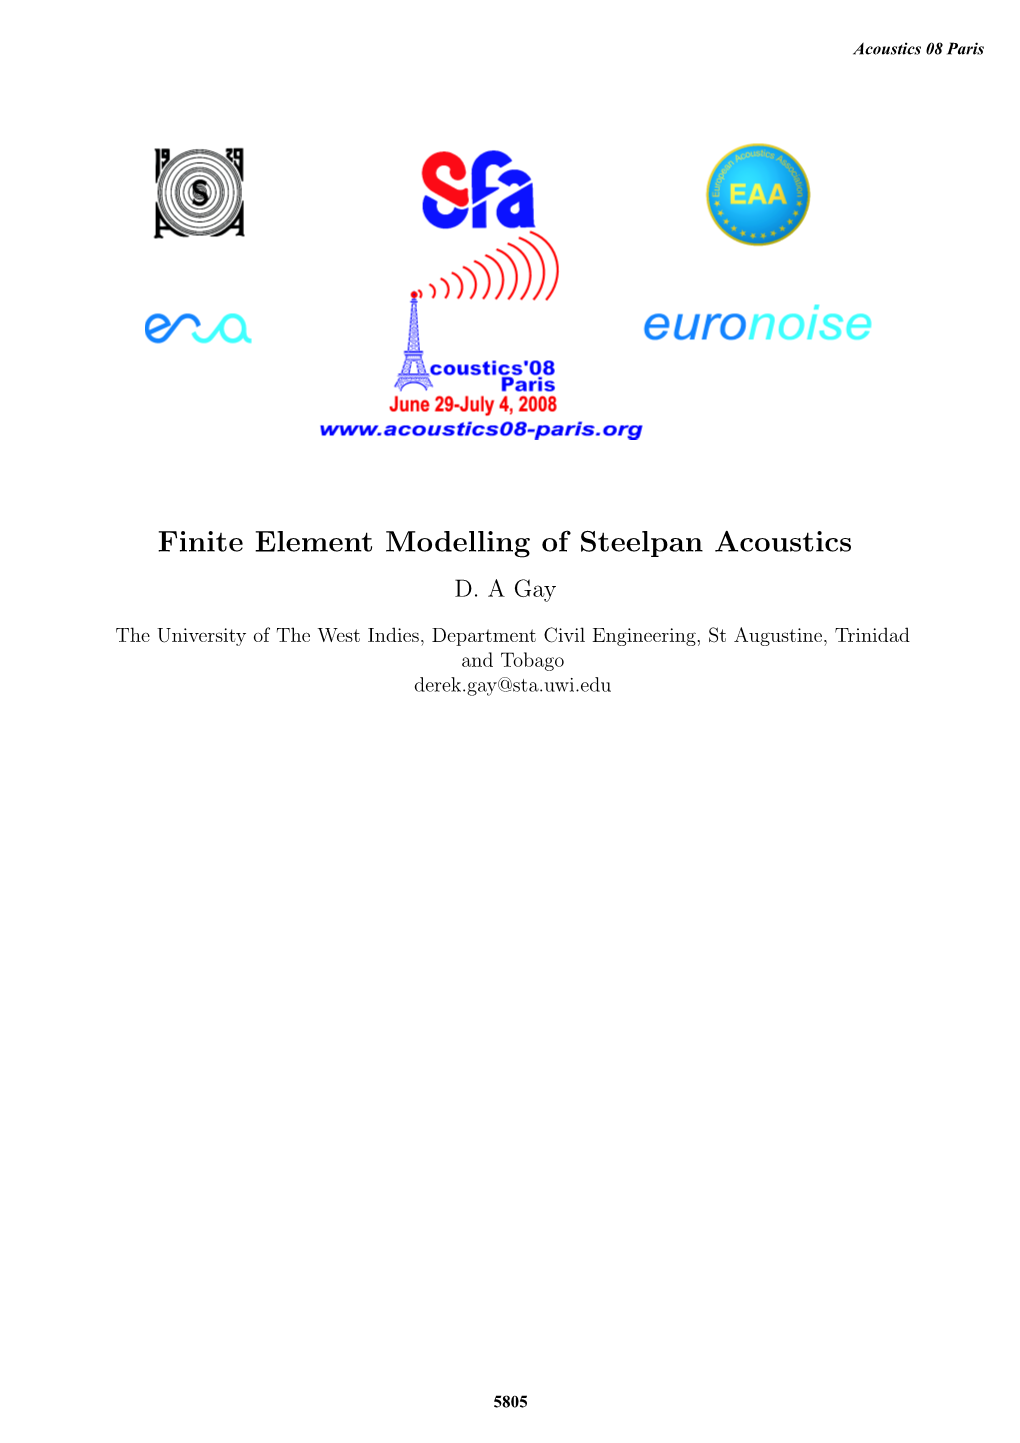 Finite Element Modelling of Steelpan Acoustics D